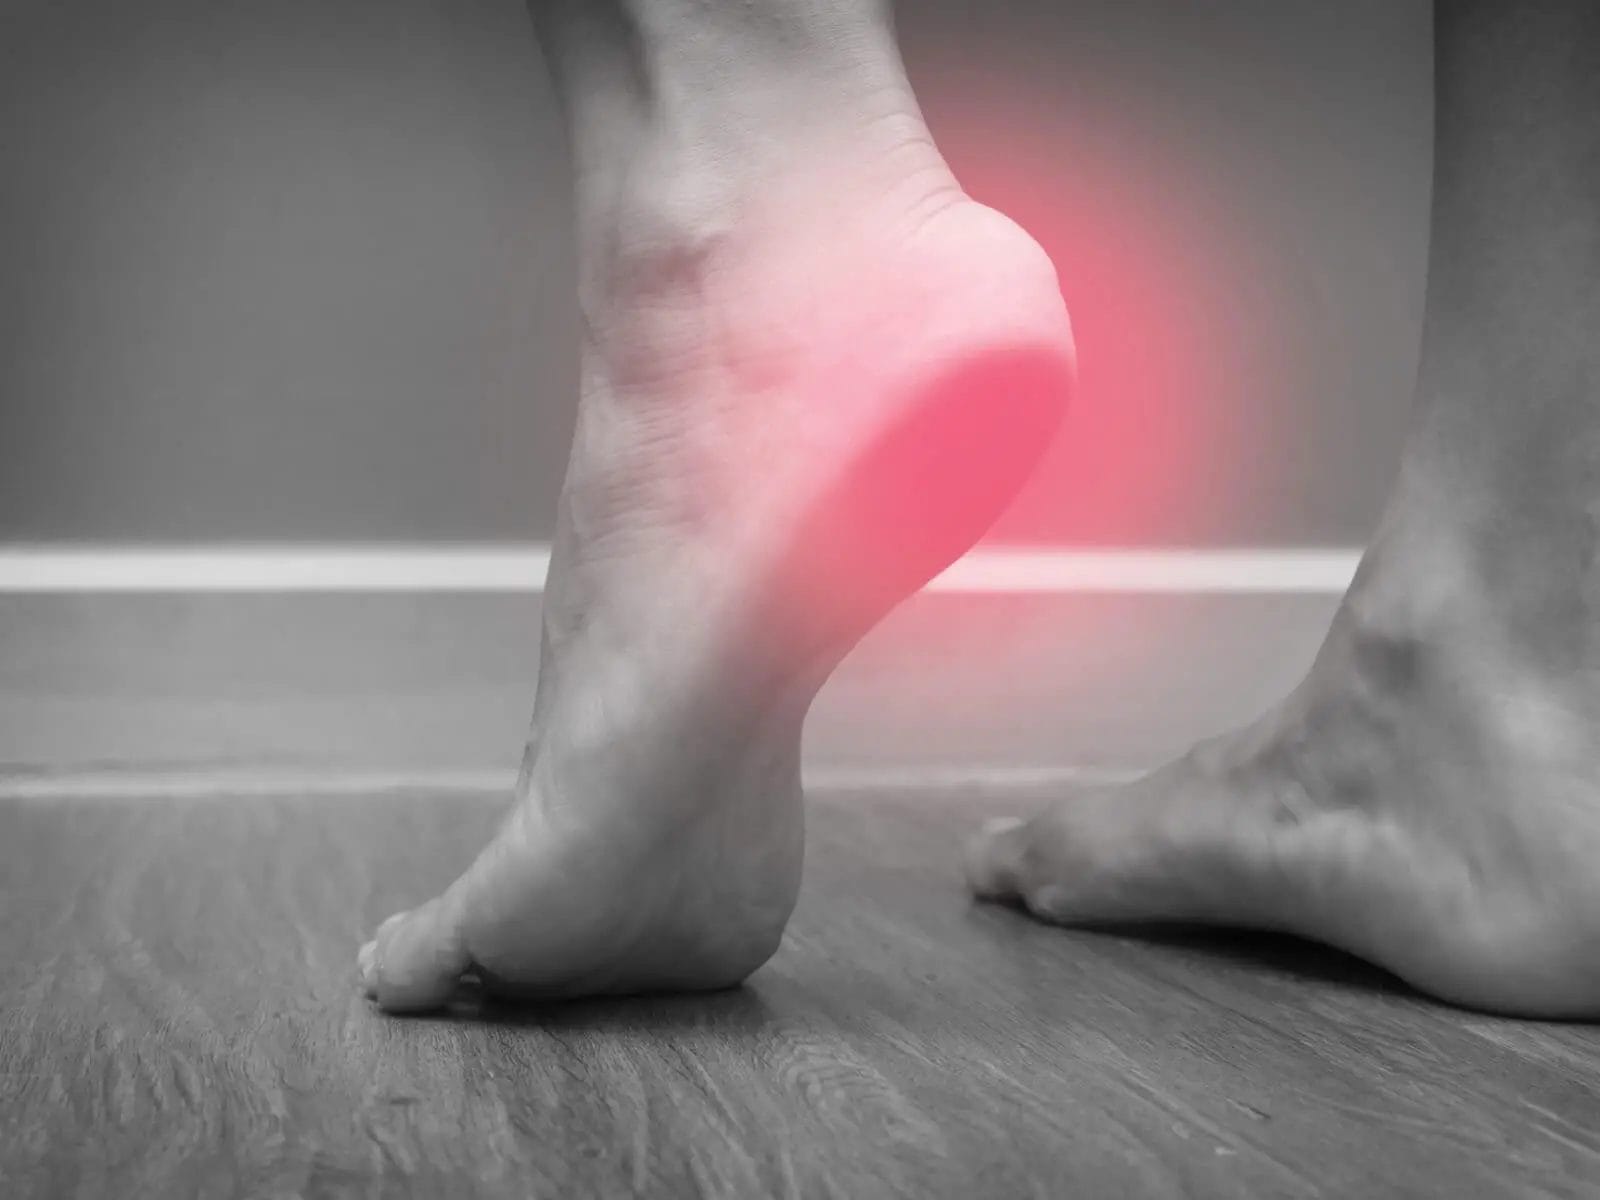 Man's foot highlighting heel pain associated with plantar fasciitis.